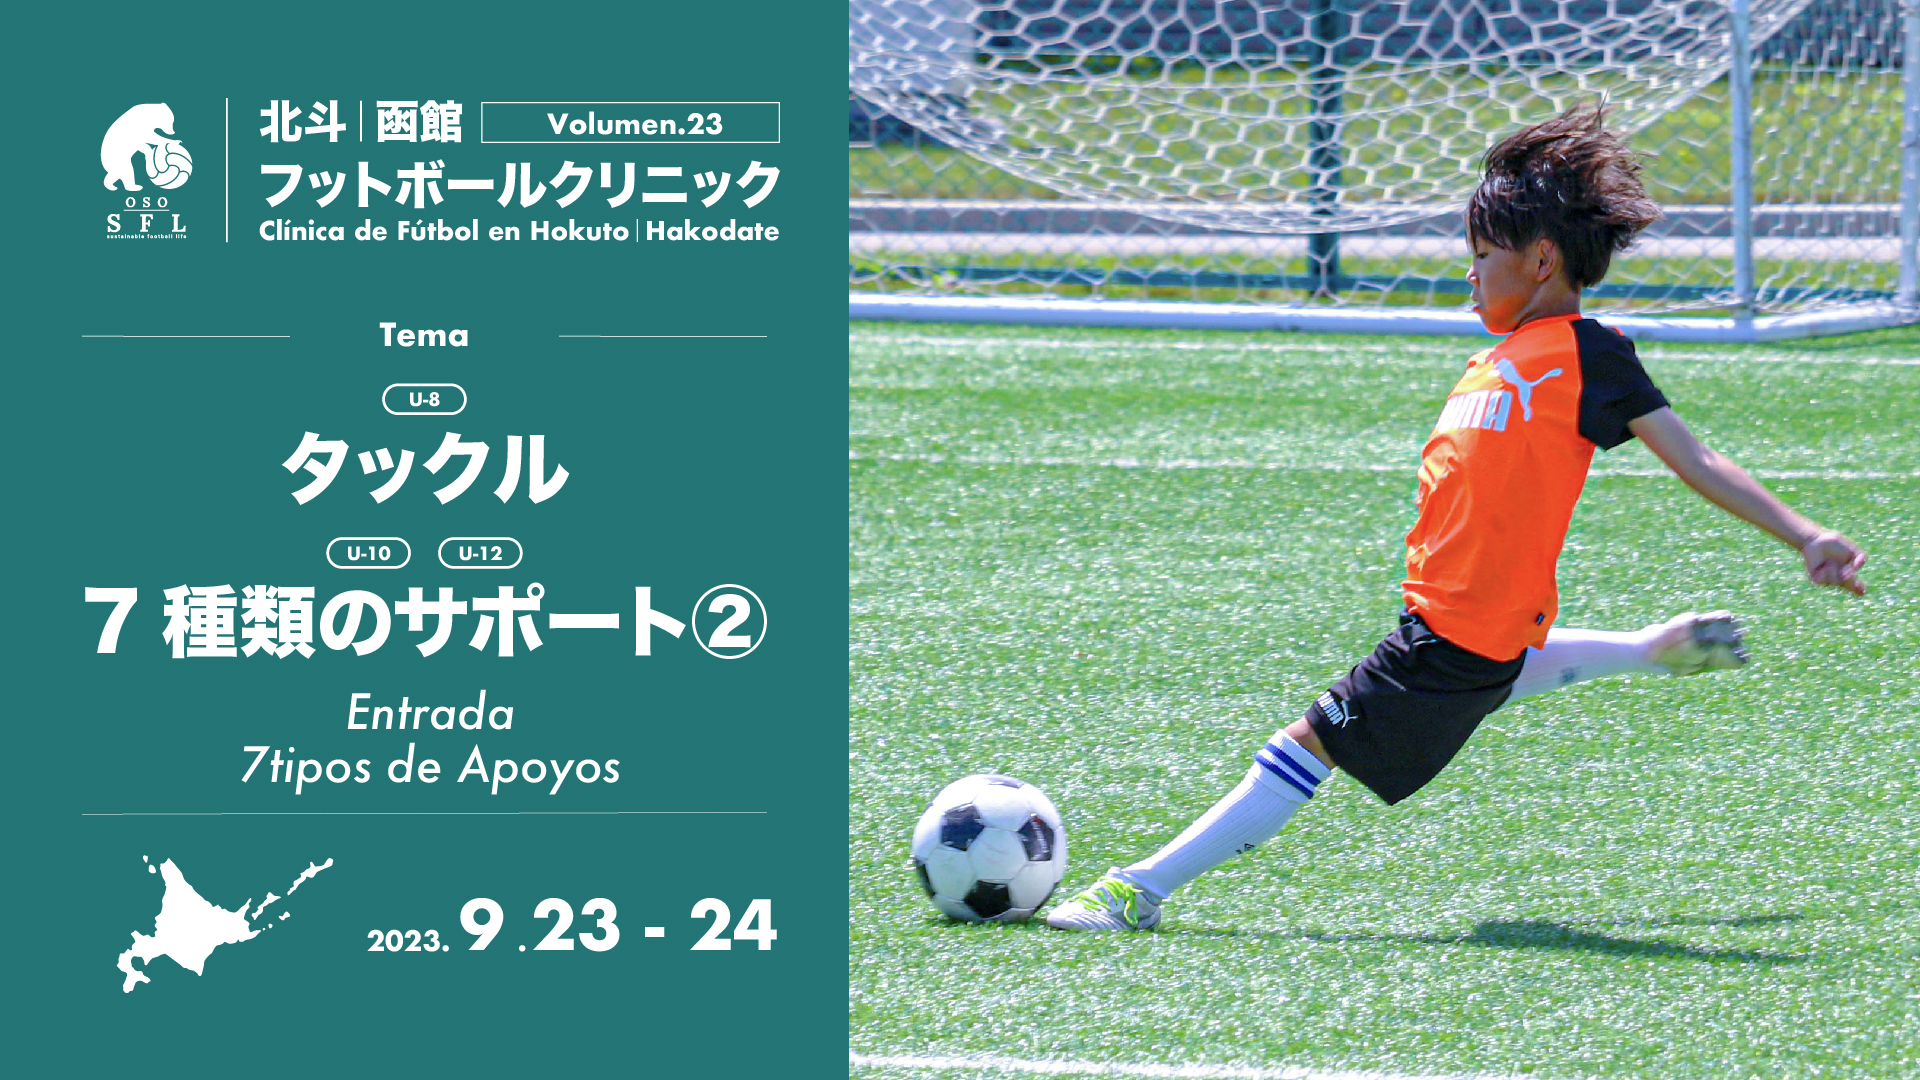 20230823_notice-hokuto-hakodate-football-clinic-2023-vol23_1920px